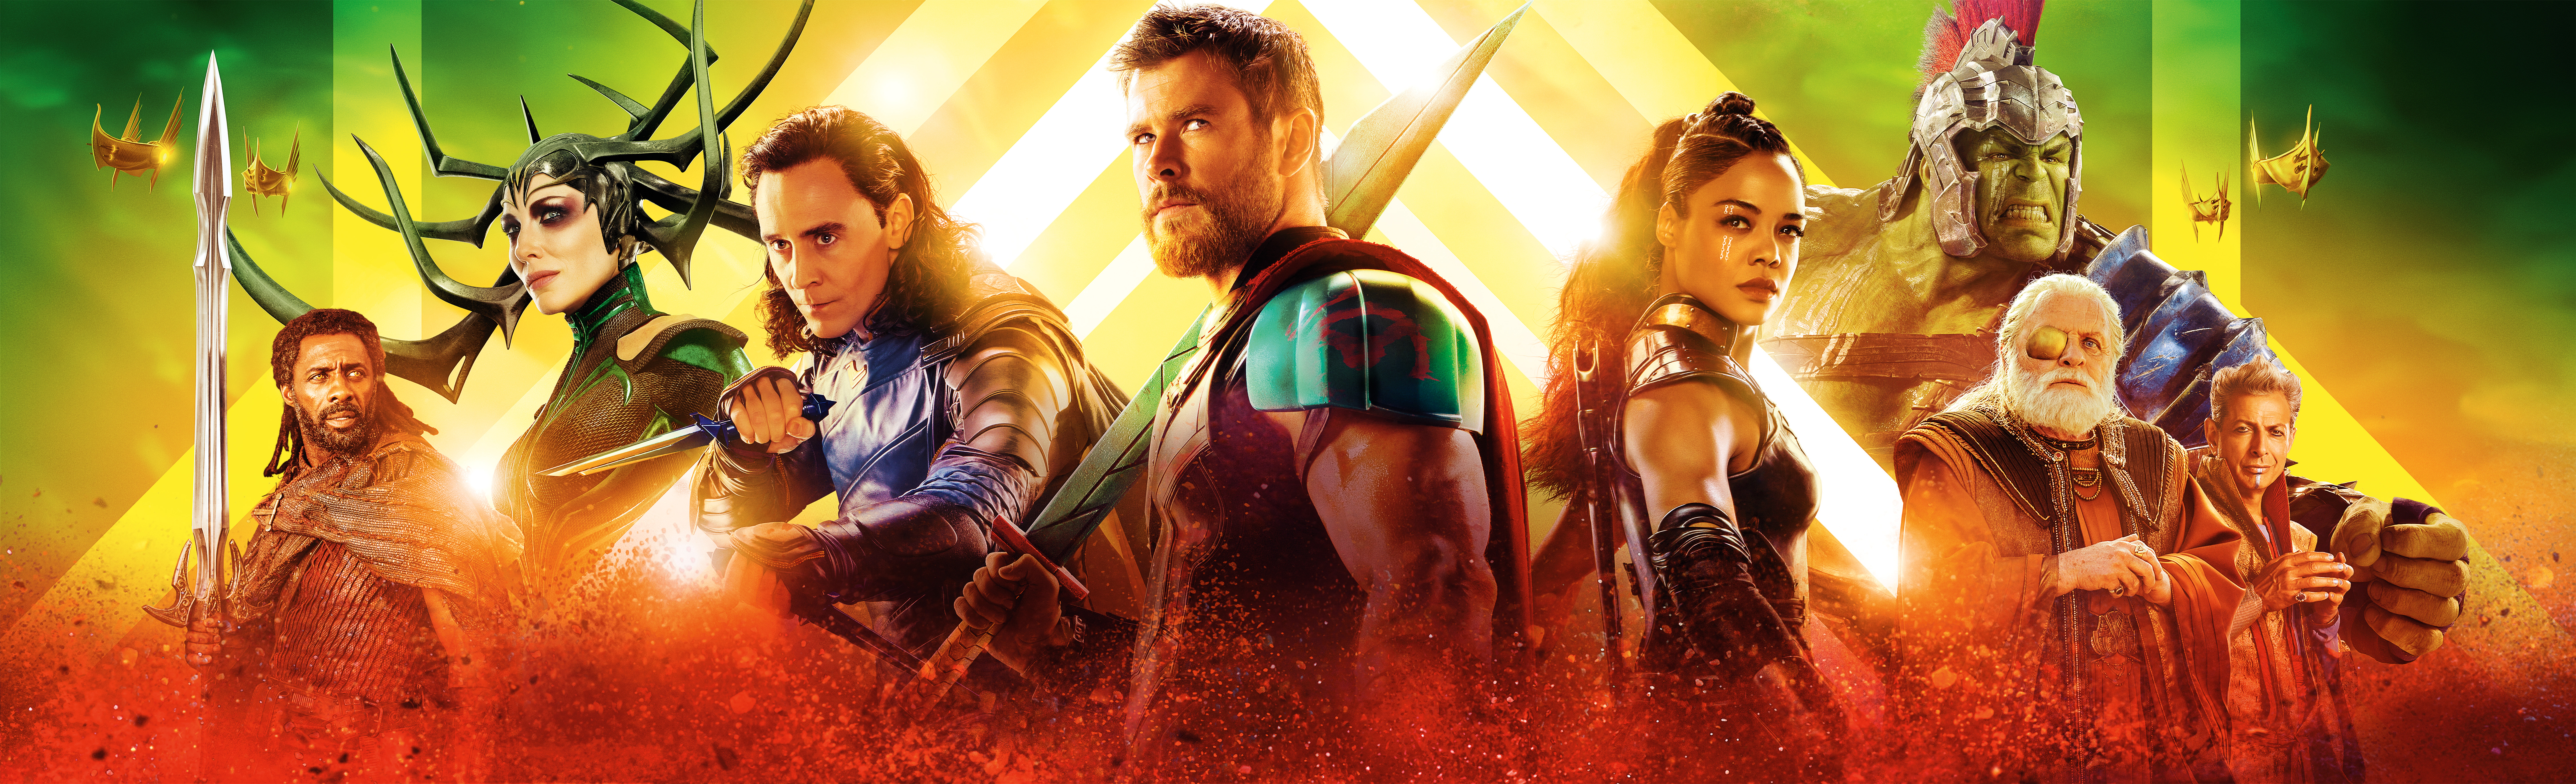 Wallpapers banner Thor: Ragnarok 2017 fantasy on the desktop